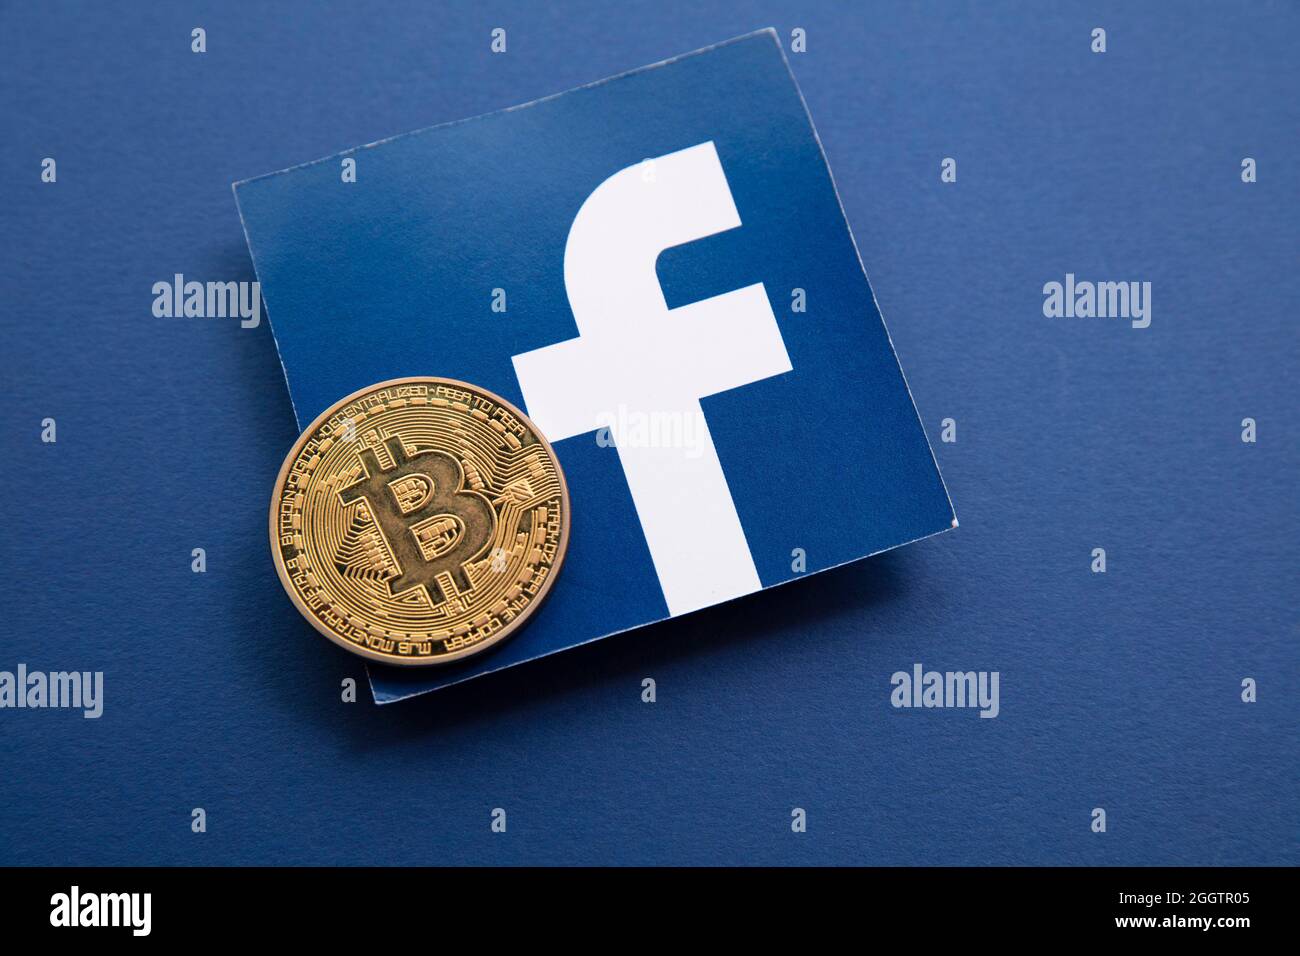 LONDRES, Royaume-Uni - septembre 2021 : crypto-monnaie Bitcoin sur un logo facebook Banque D'Images